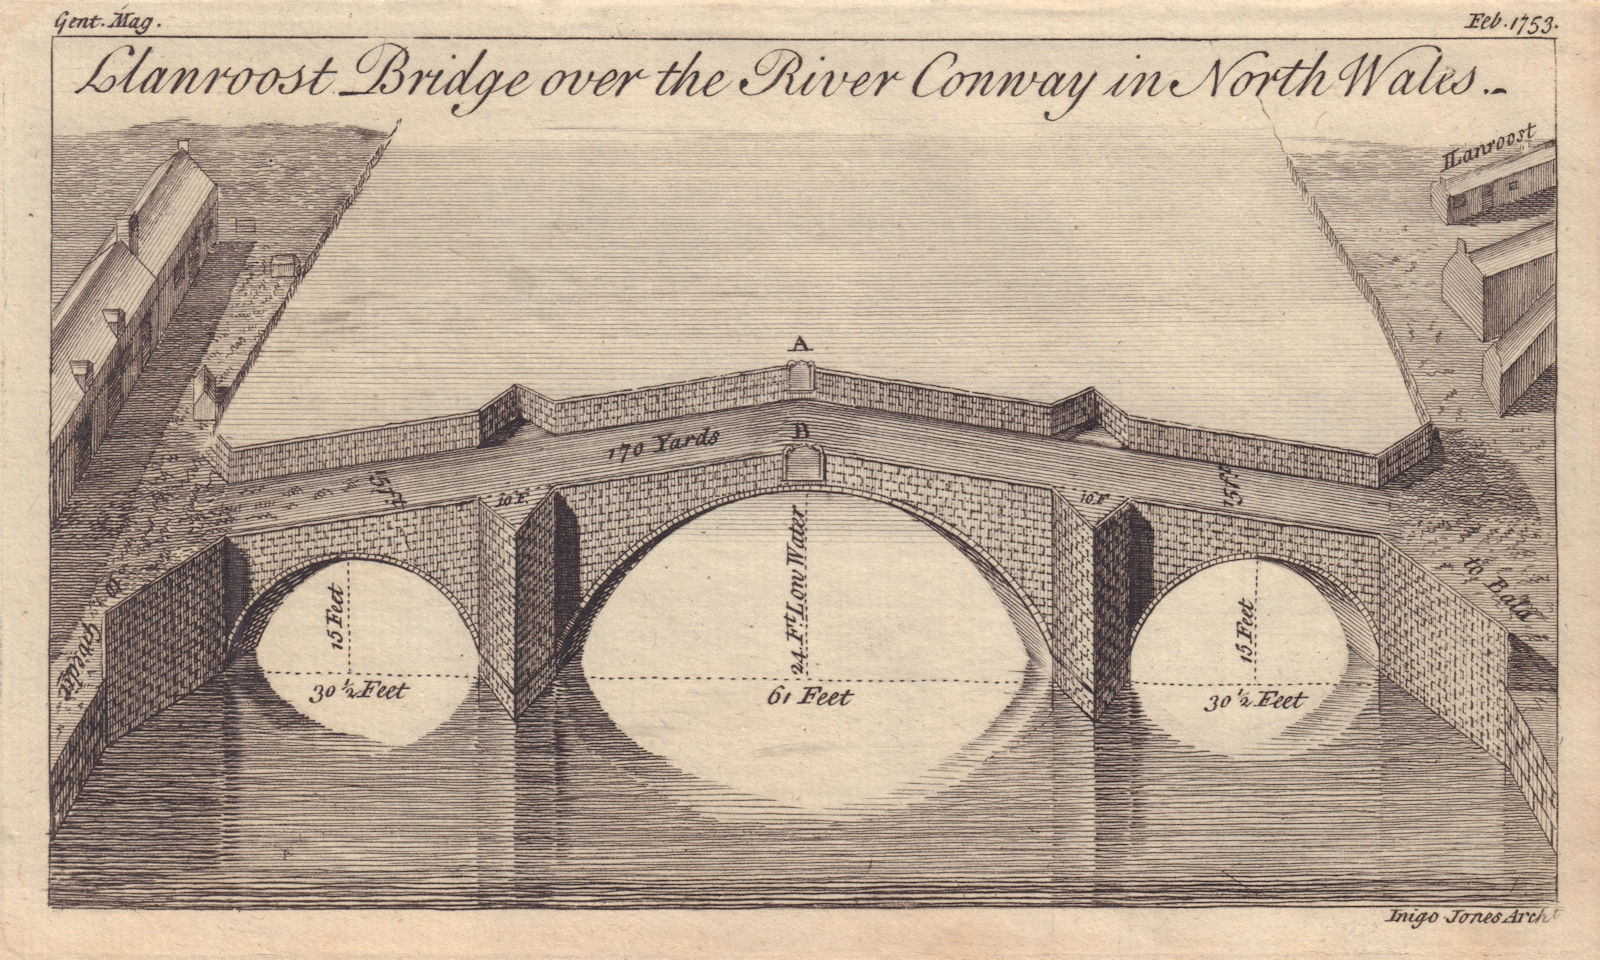 Llanroost Bridge over the River Conway. Pont Fawr, Llanrwst. Inigo Jones 1753